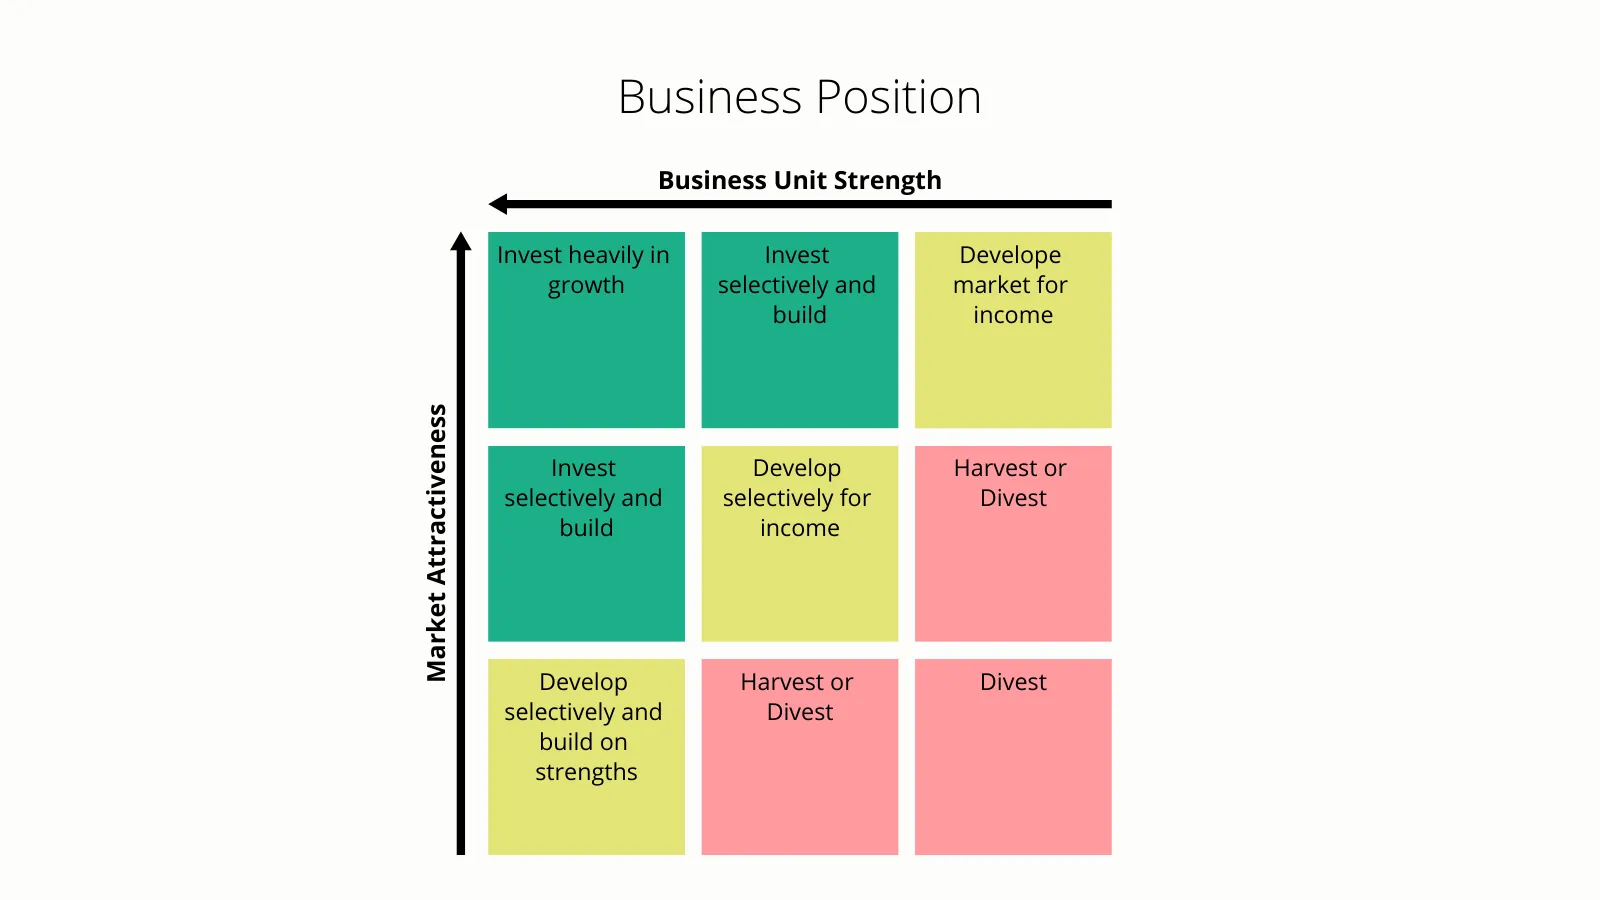 GE-McKinsey Matrix example: Business Position